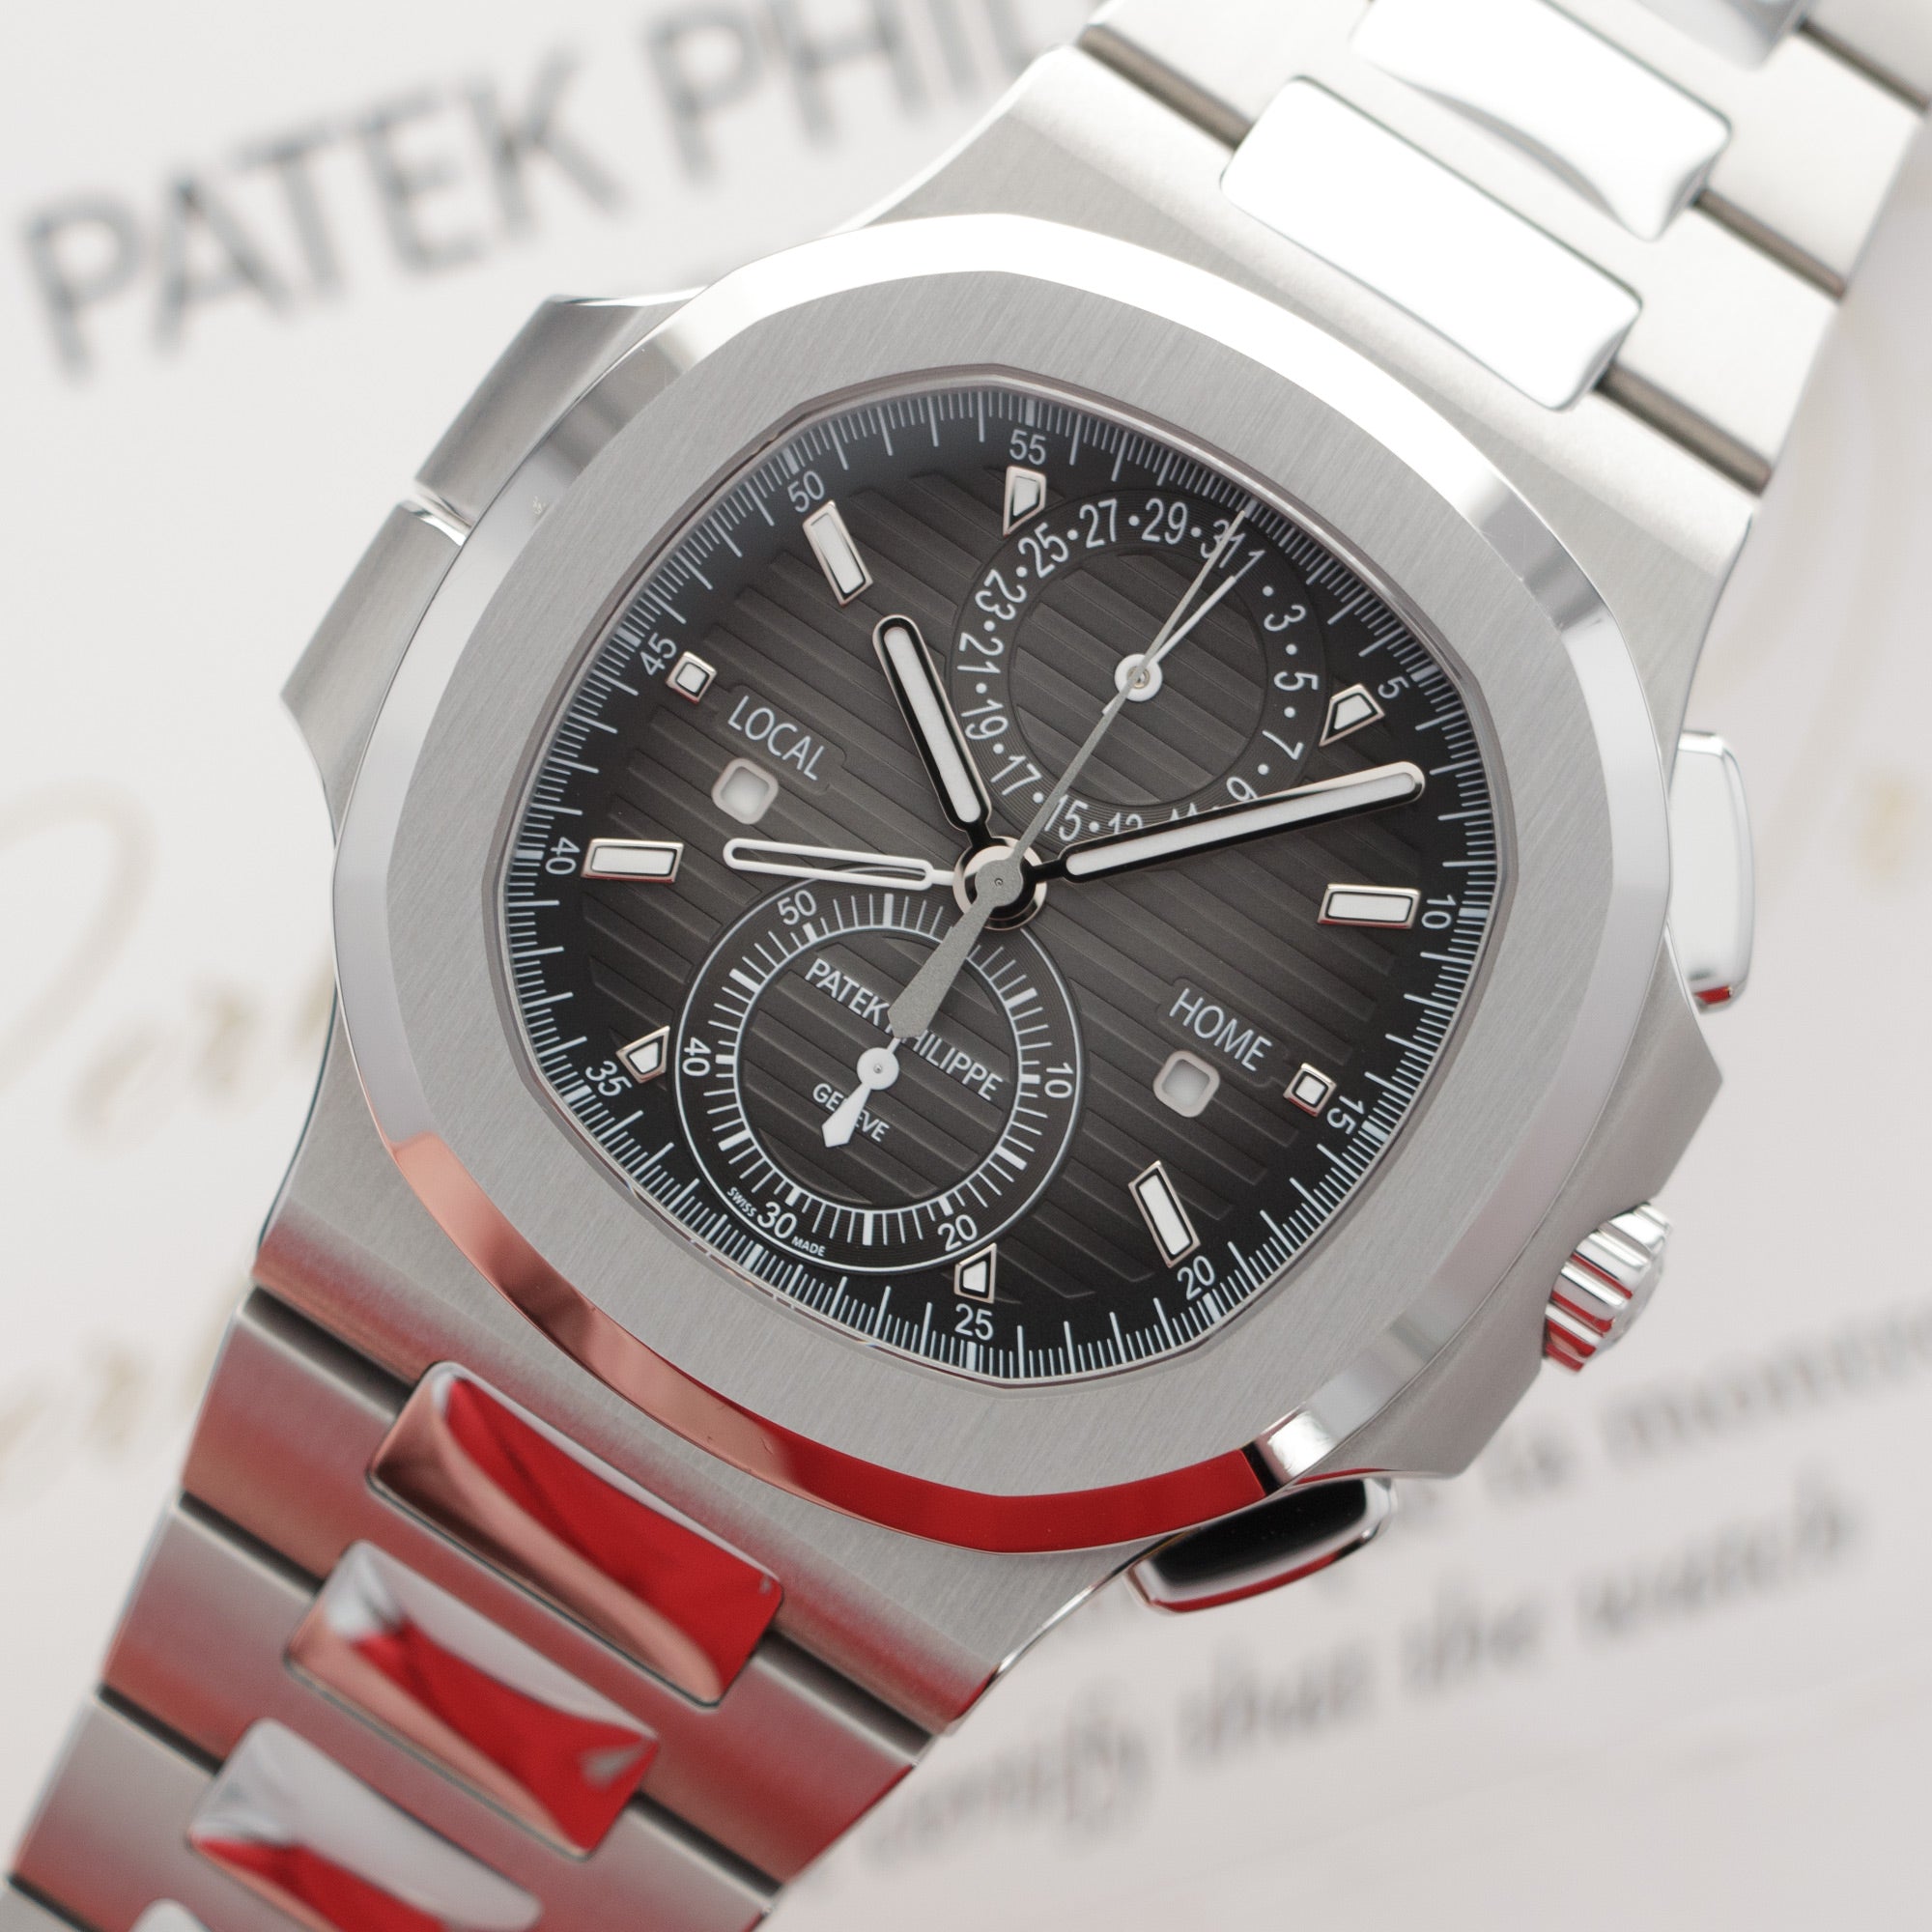 Patek Philippe - Patek Philippe Steel Nautilus Chronograph Watch Ref. 5990 - The Keystone Watches